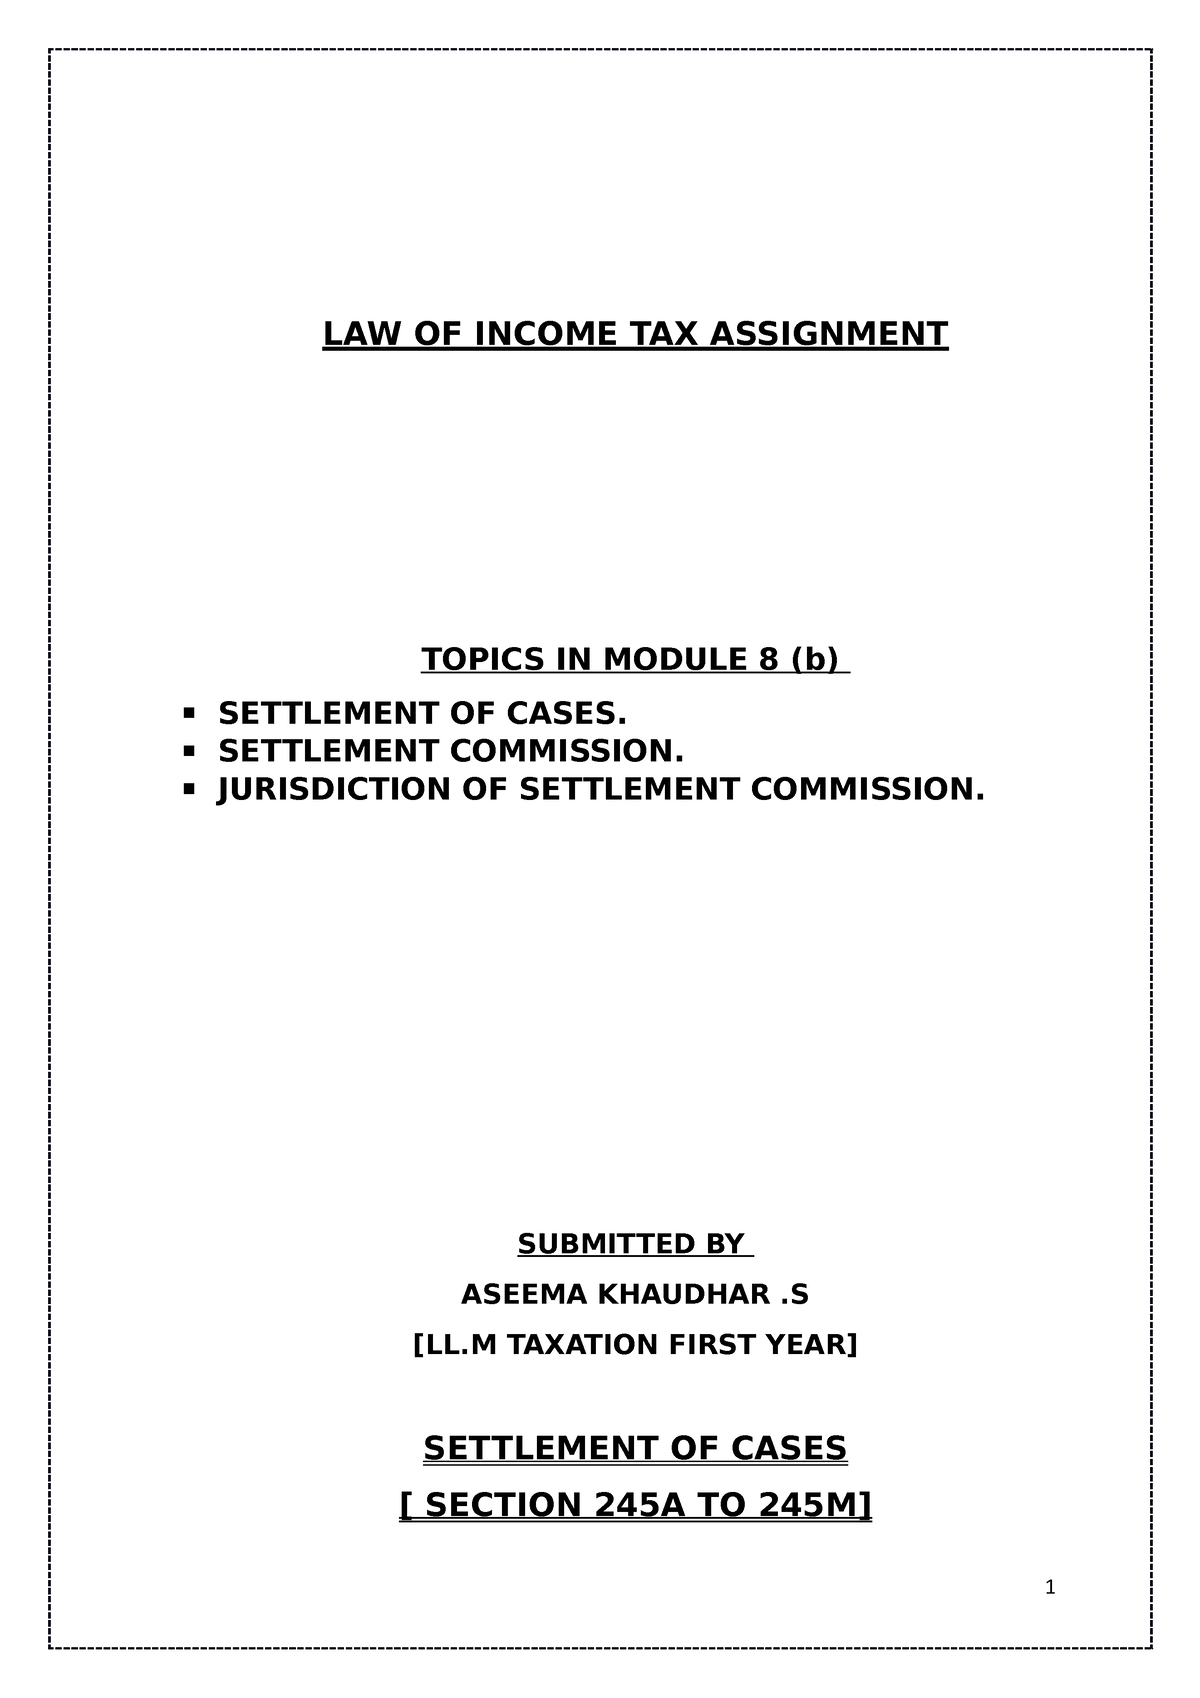 taxation dissertation topics